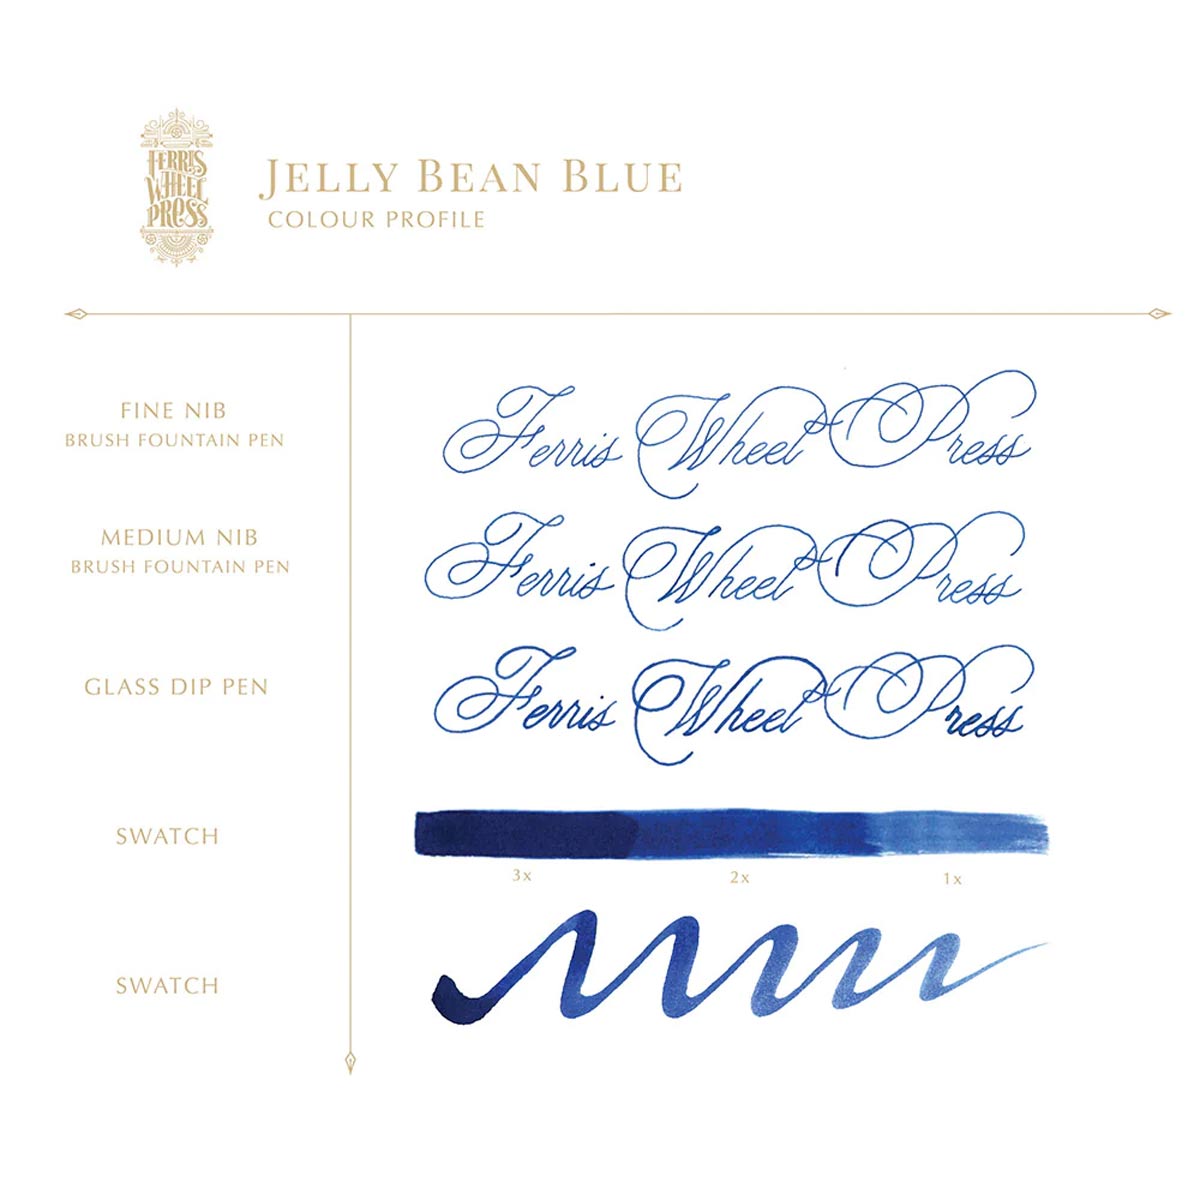 Ferris Wheel Press - Jelly Bean Blue (small)